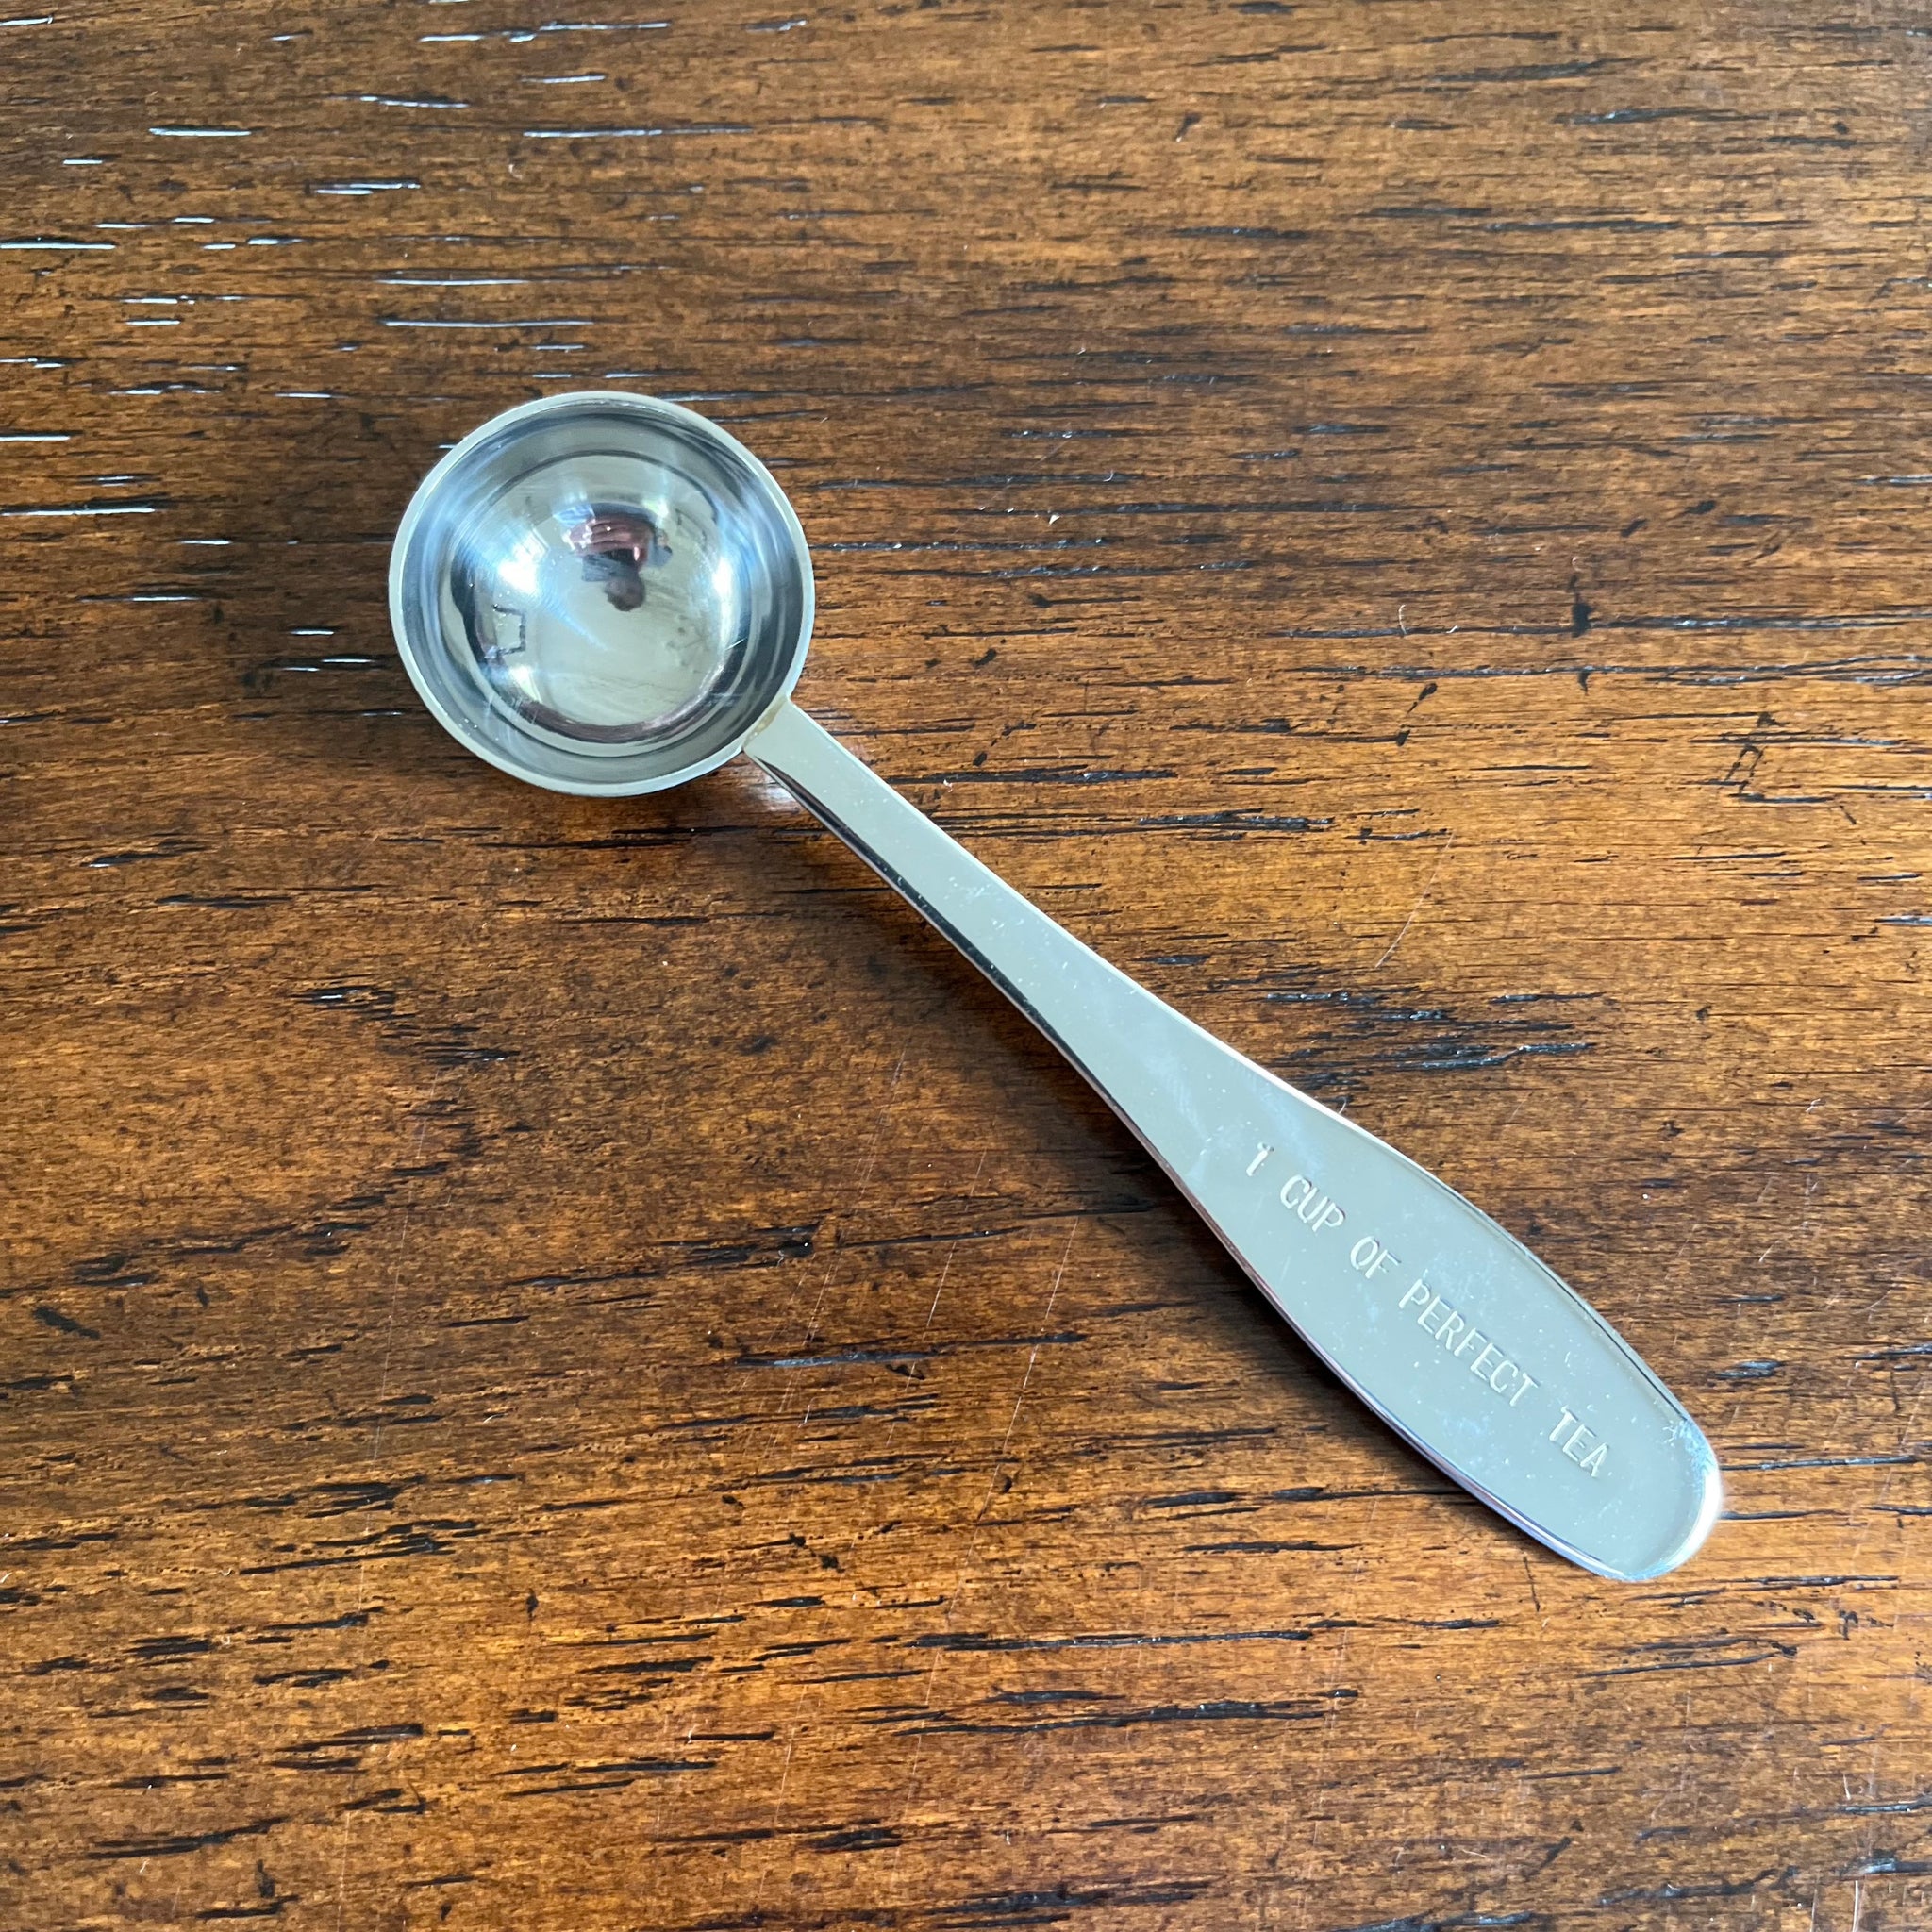 Tea Measuring Spoon, Stainless Steel, 1 Perfect Cup of Loose Leaf Tea, Camellios